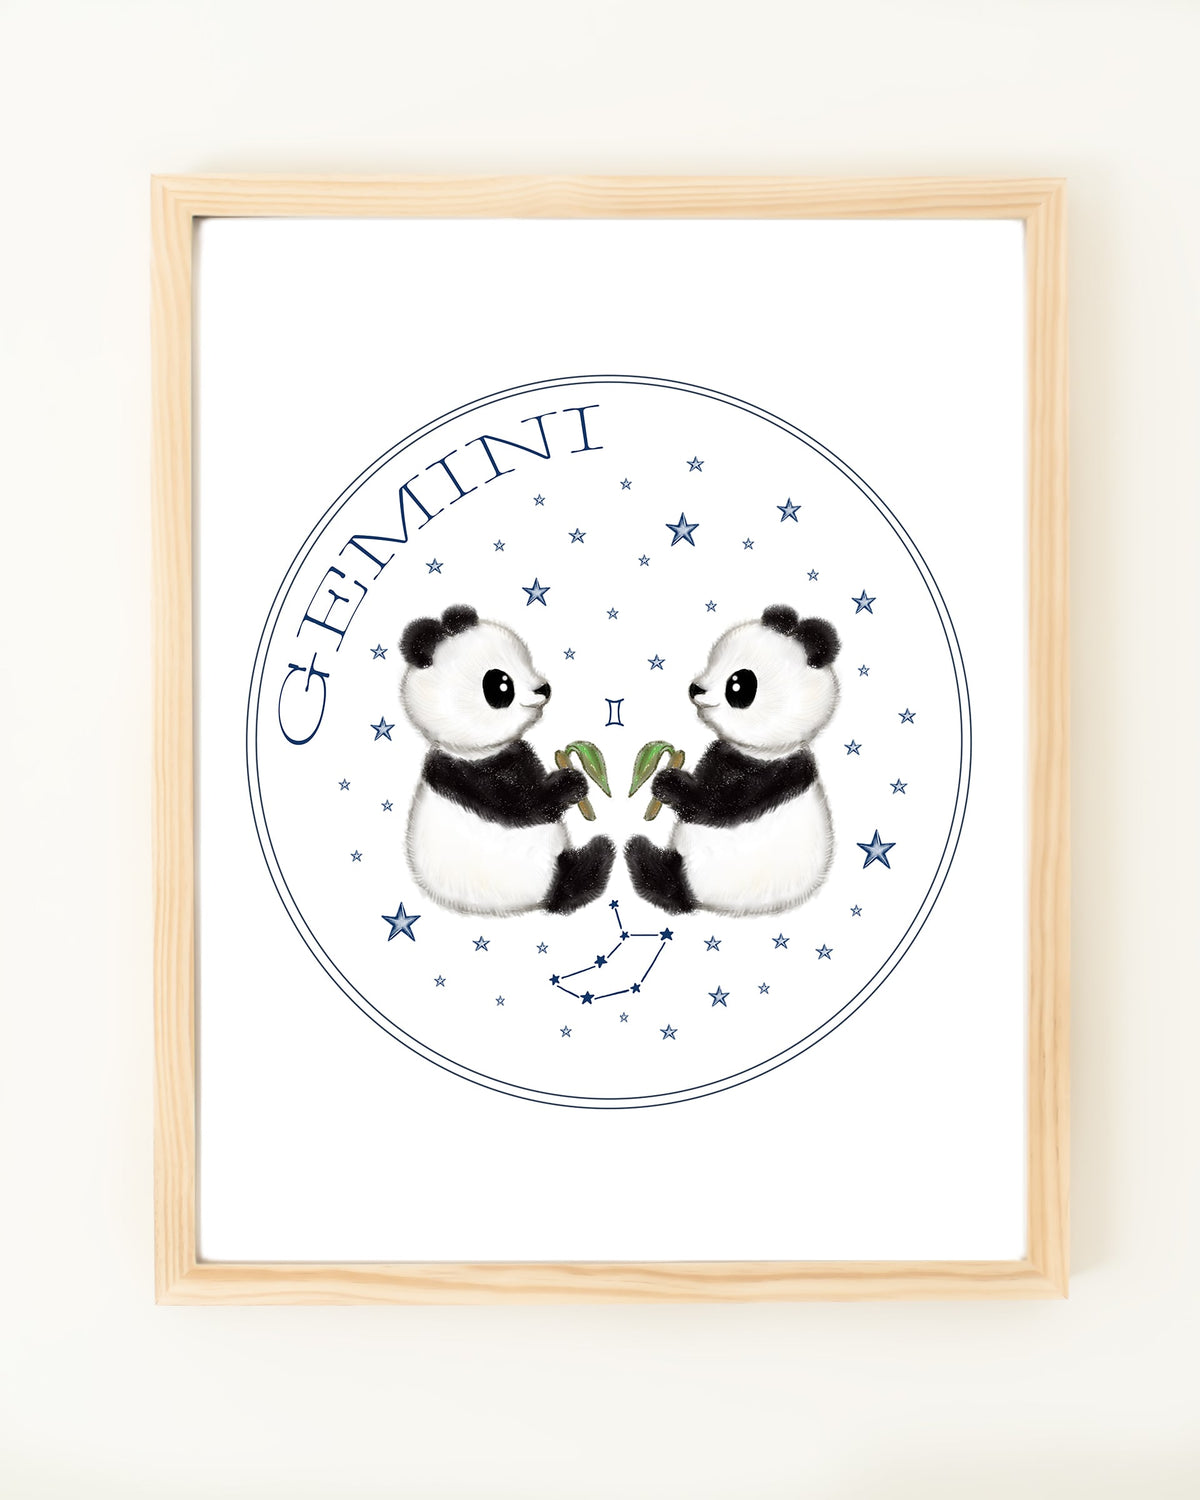 Framed hand drawn stars zodiac nursery decor wall art poster Gemini cute baby pandas with bamboo